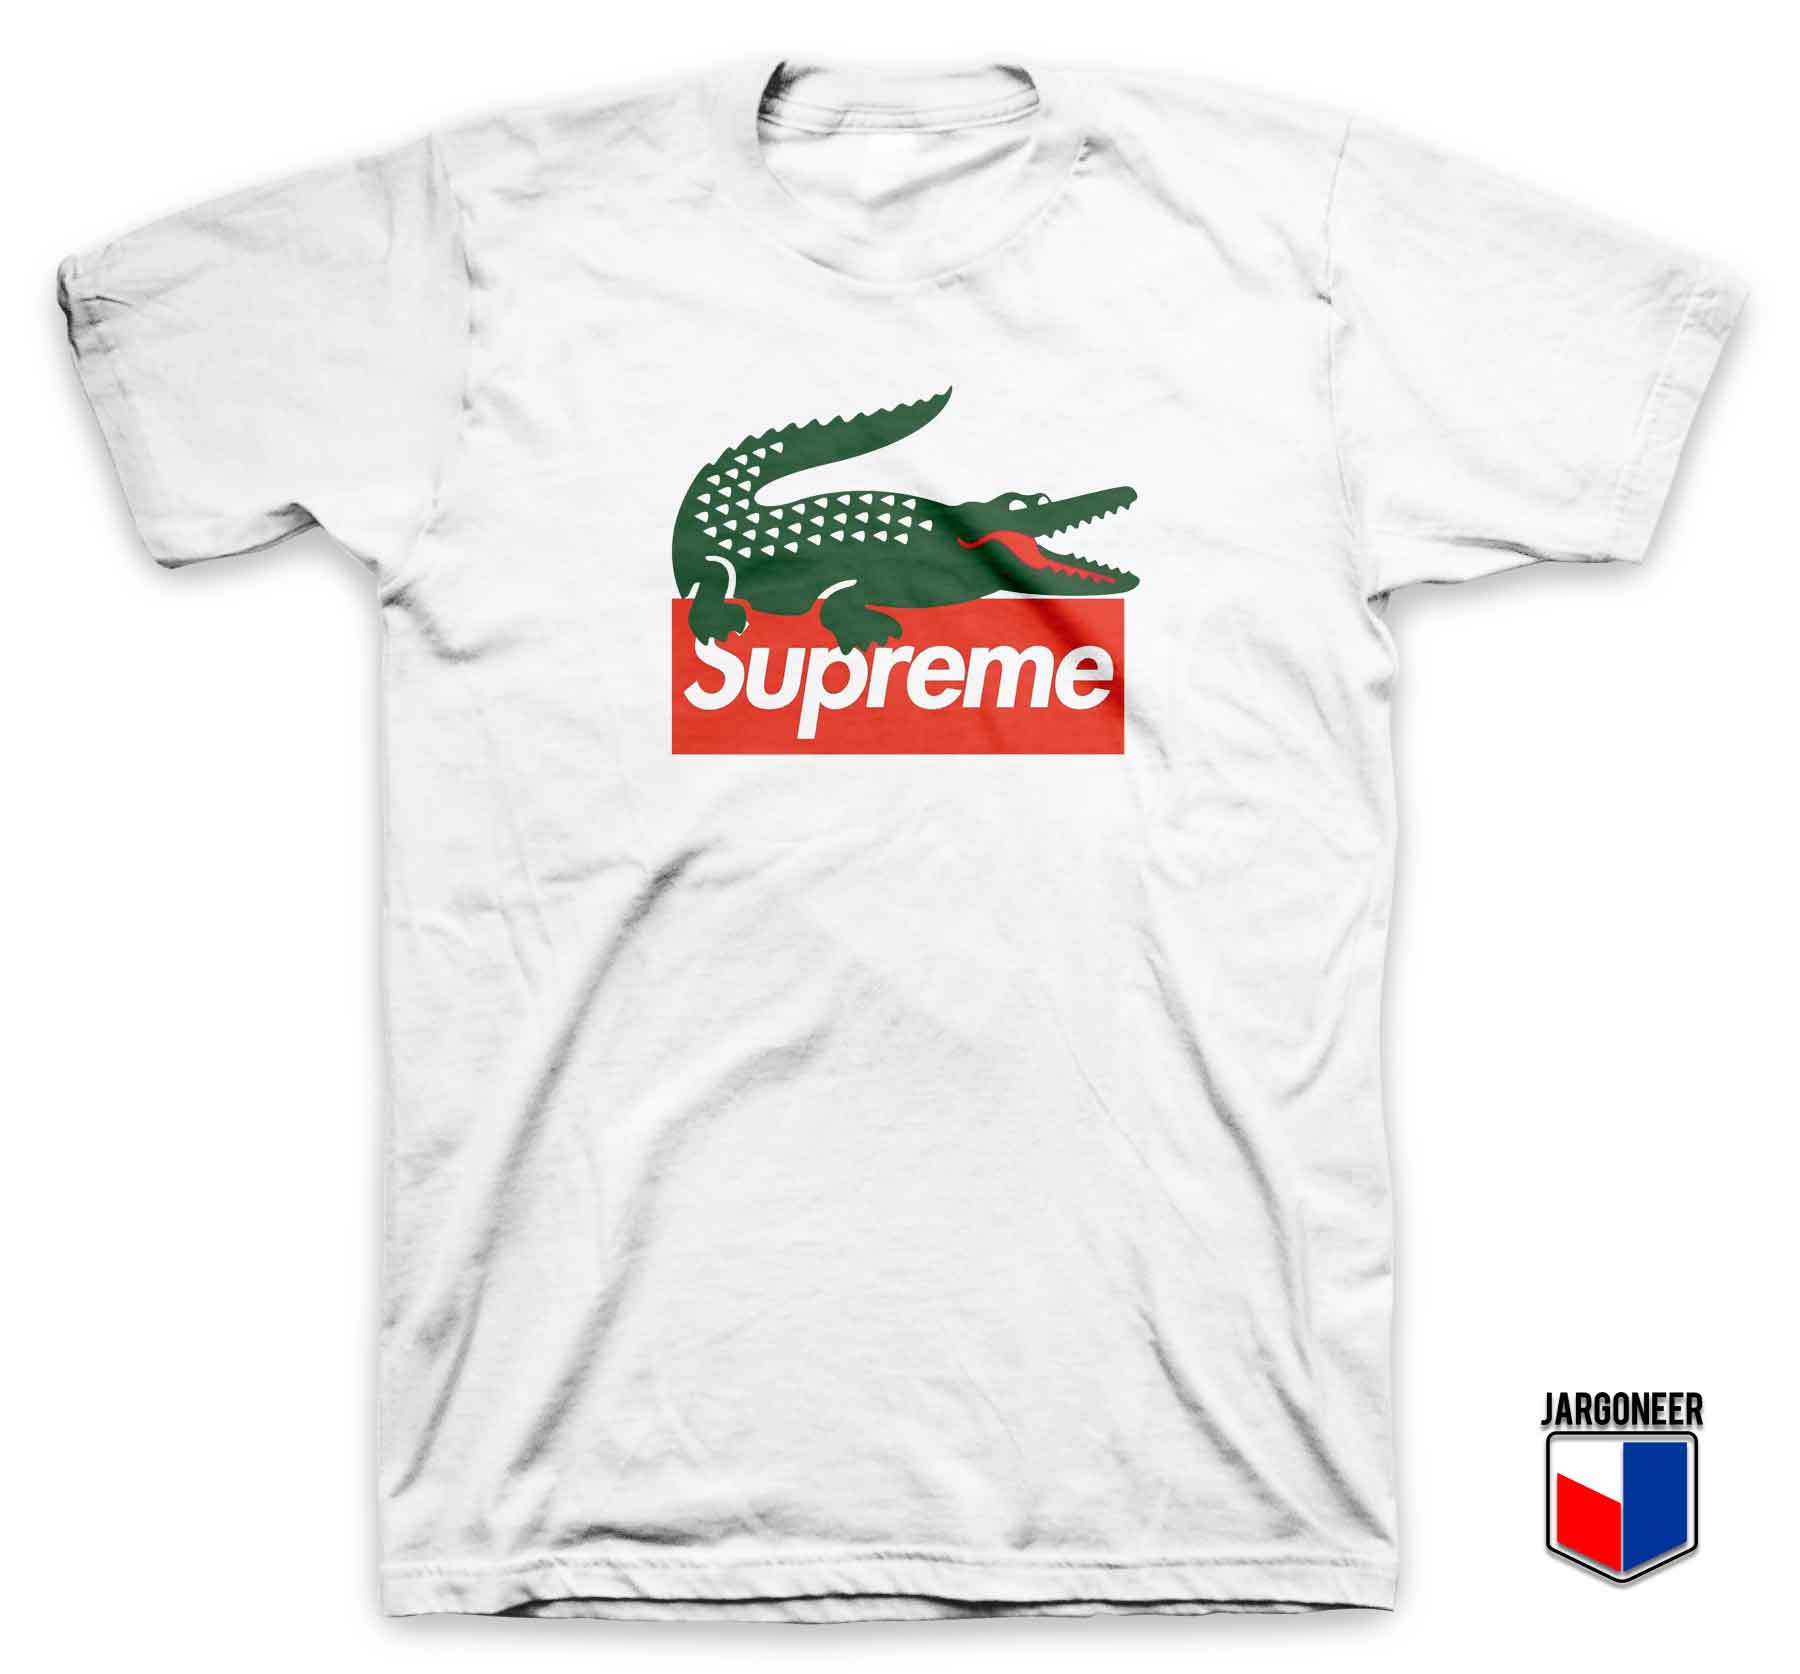 Supreme Crocodile T Shirt Design By jargoneer.com